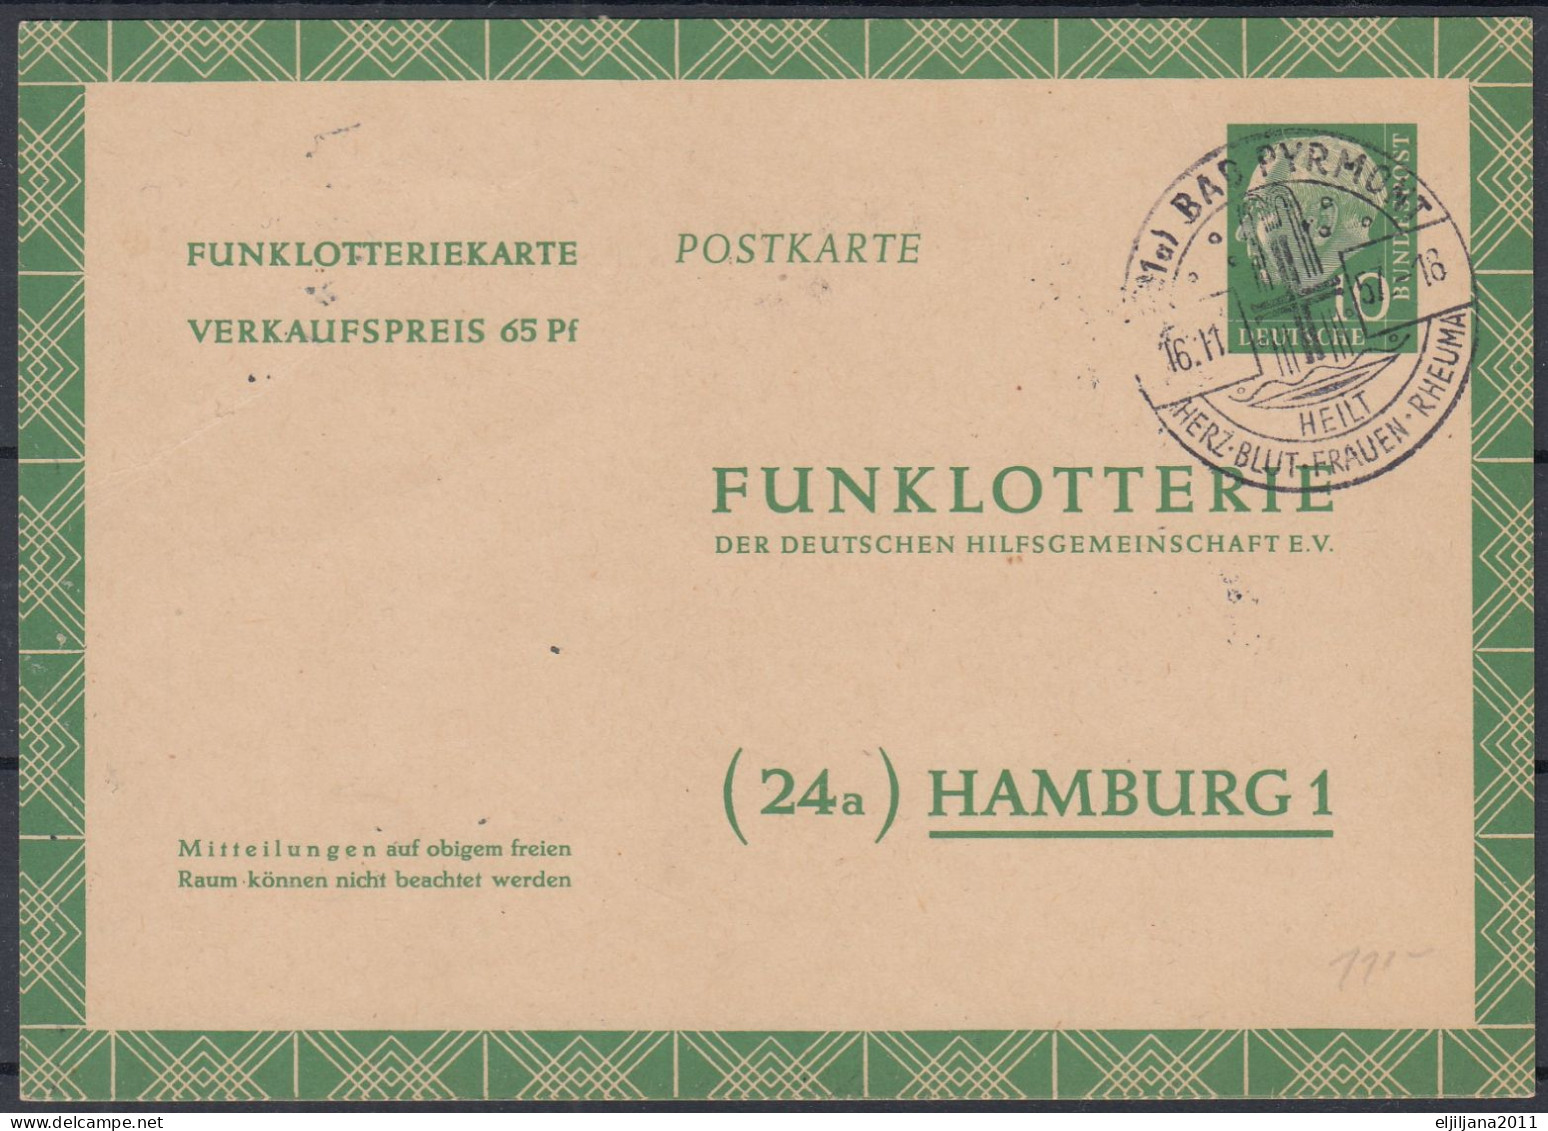 ⁕ Germany 1957 Deutsche BundesPost ⁕ FUNKLOTTERIE (24a) Hamburg 1 ⁕ Bad Pyrmont Postmark ⁕ Stationery Postcard - Postales - Usados